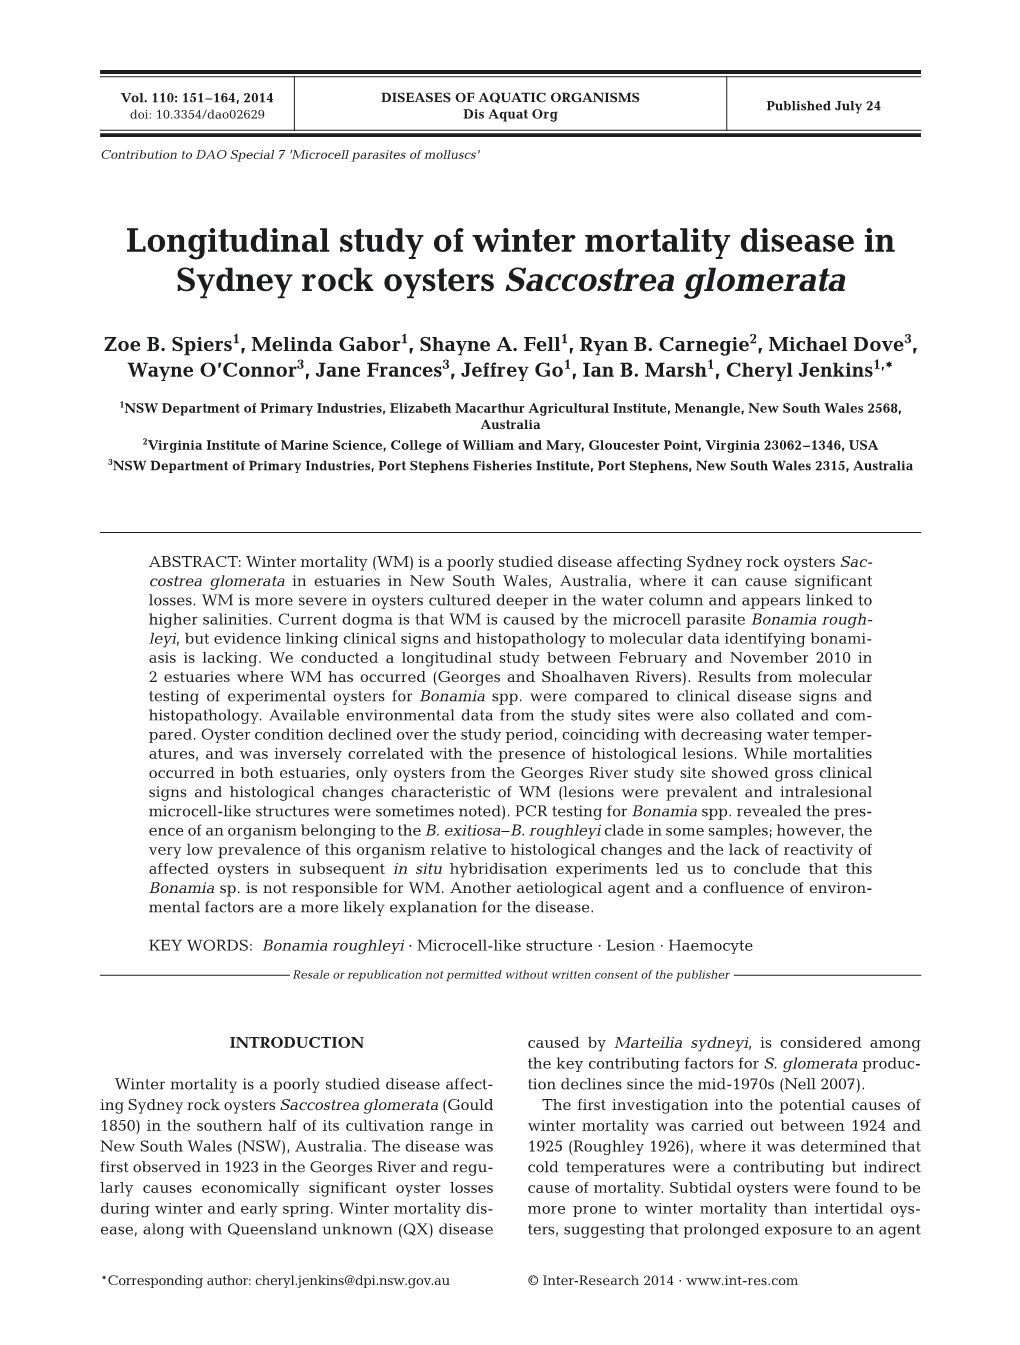 Longitudinal Study of Winter Mortality Disease in Sydney Rock Oysters Saccostrea Glomerata